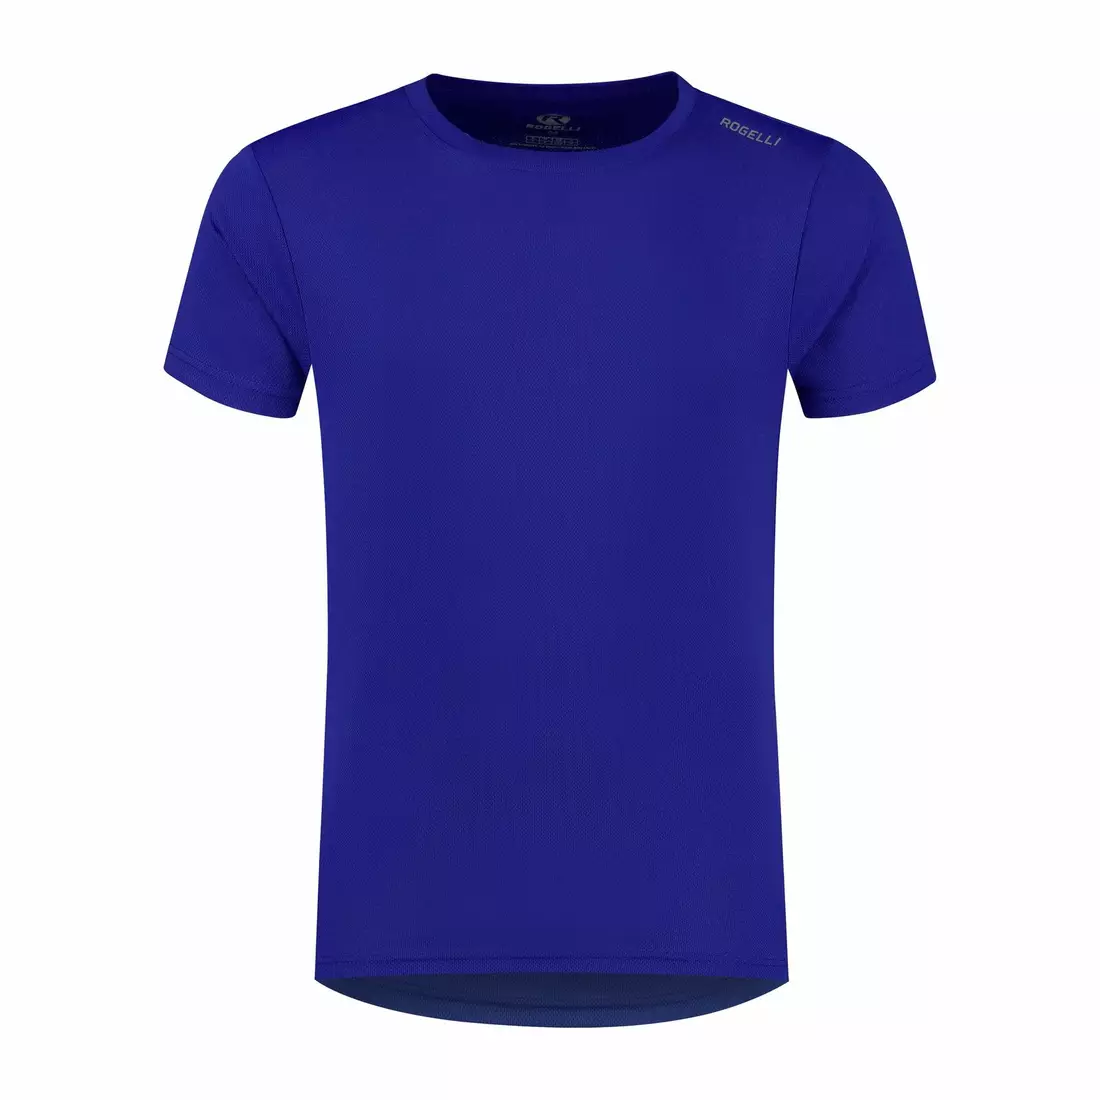 ogelli Promo Children's Sports Shirt, Blue